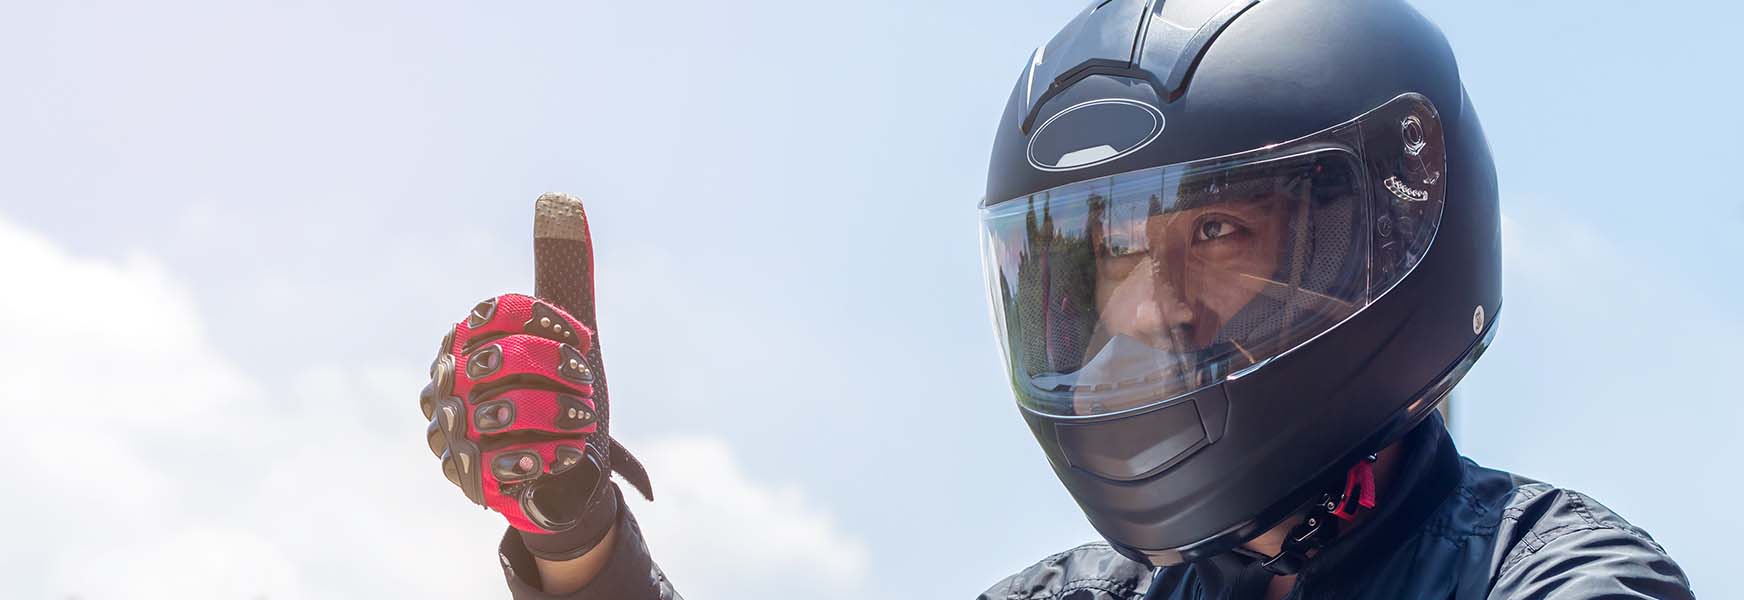 Motorcycle rider wearing helmet, giving thumbs up